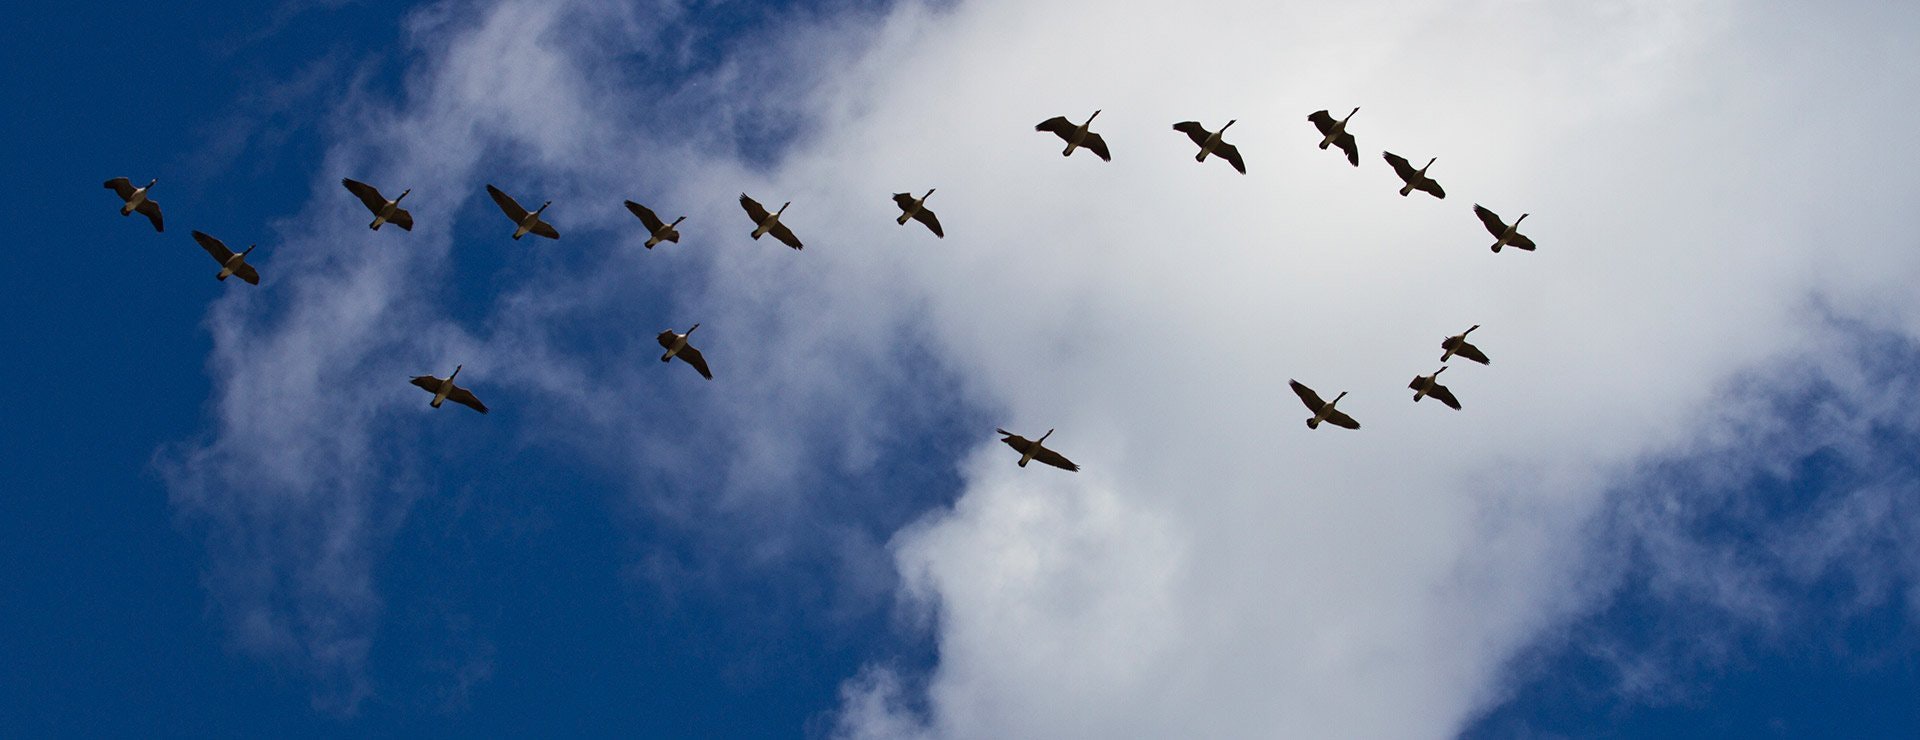 Birds flying south in a blue sky